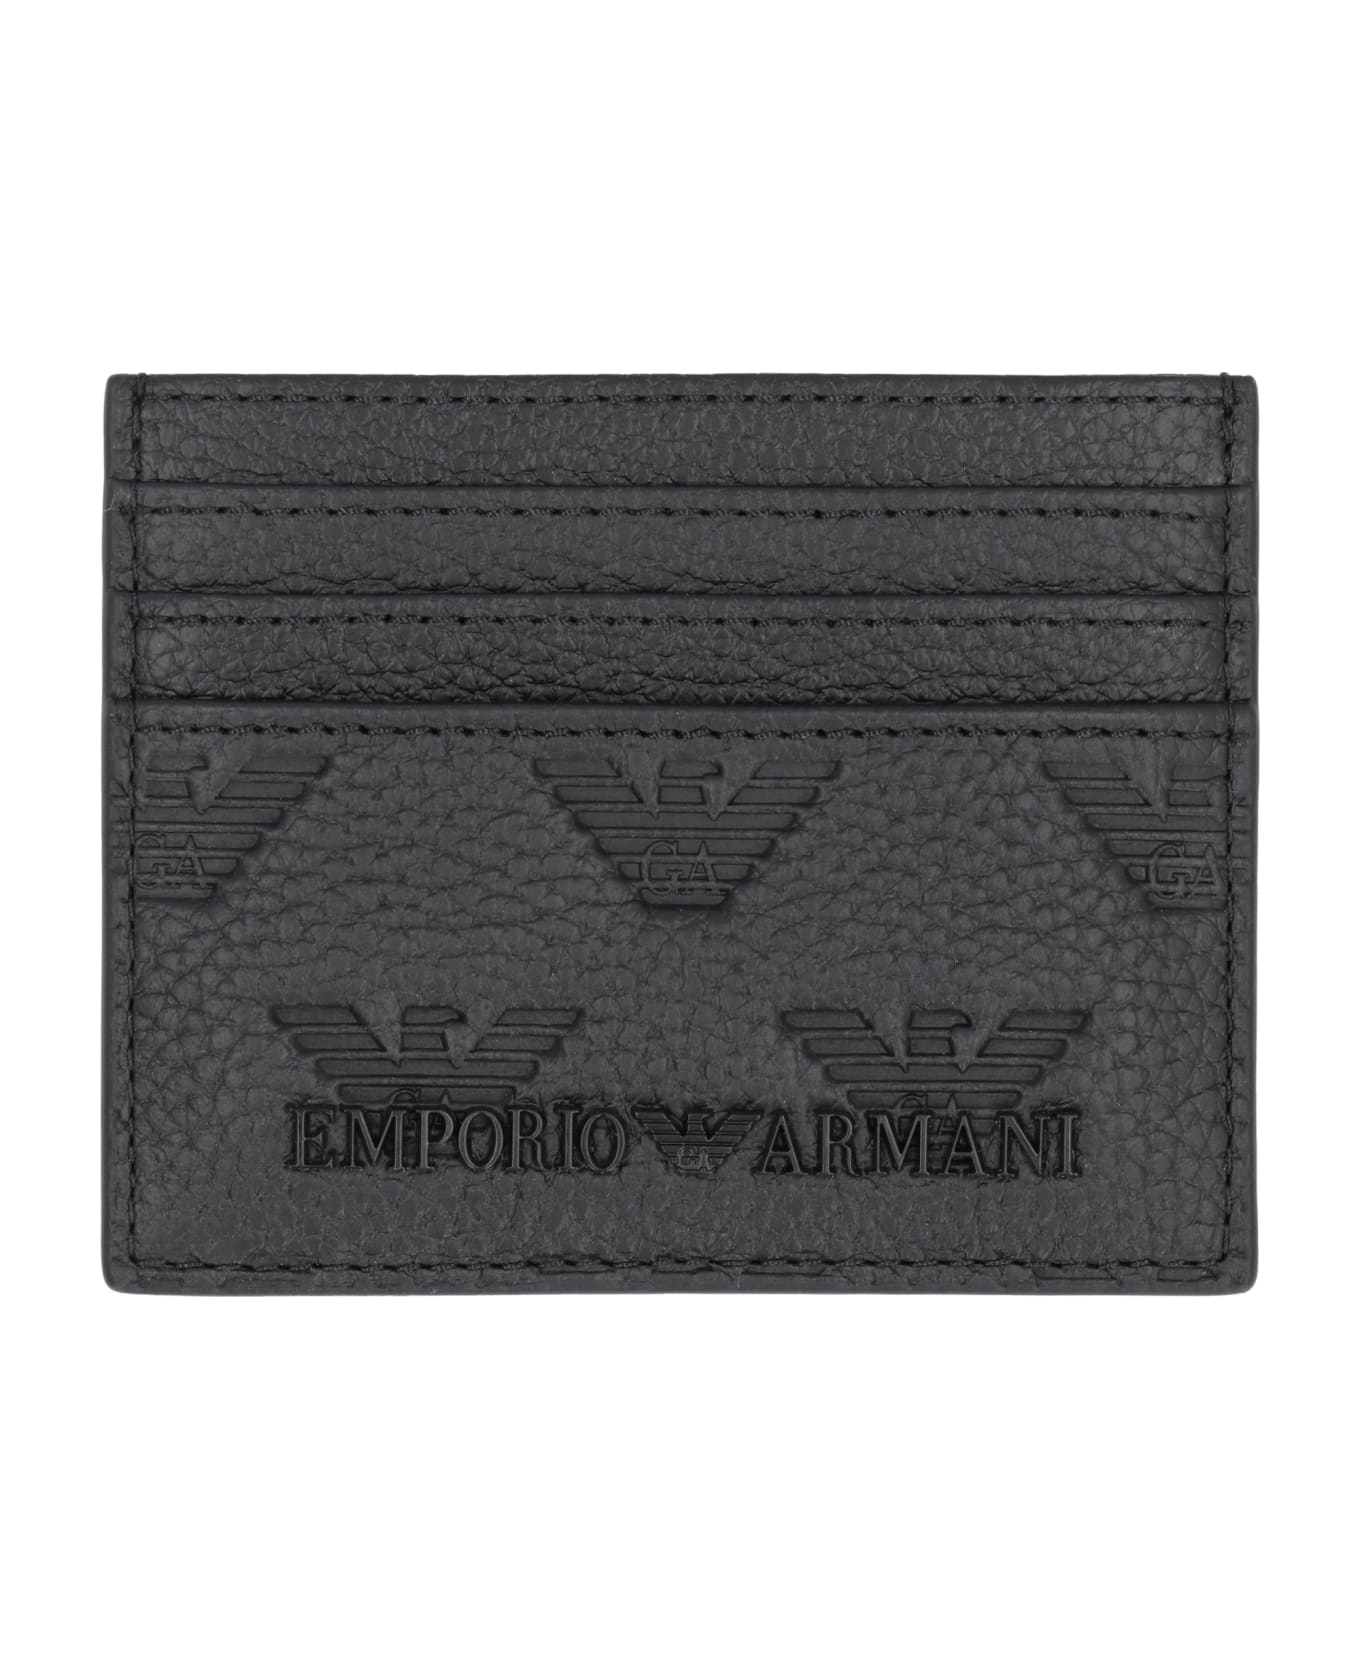 Emporio Armani Leather Card Holder - black